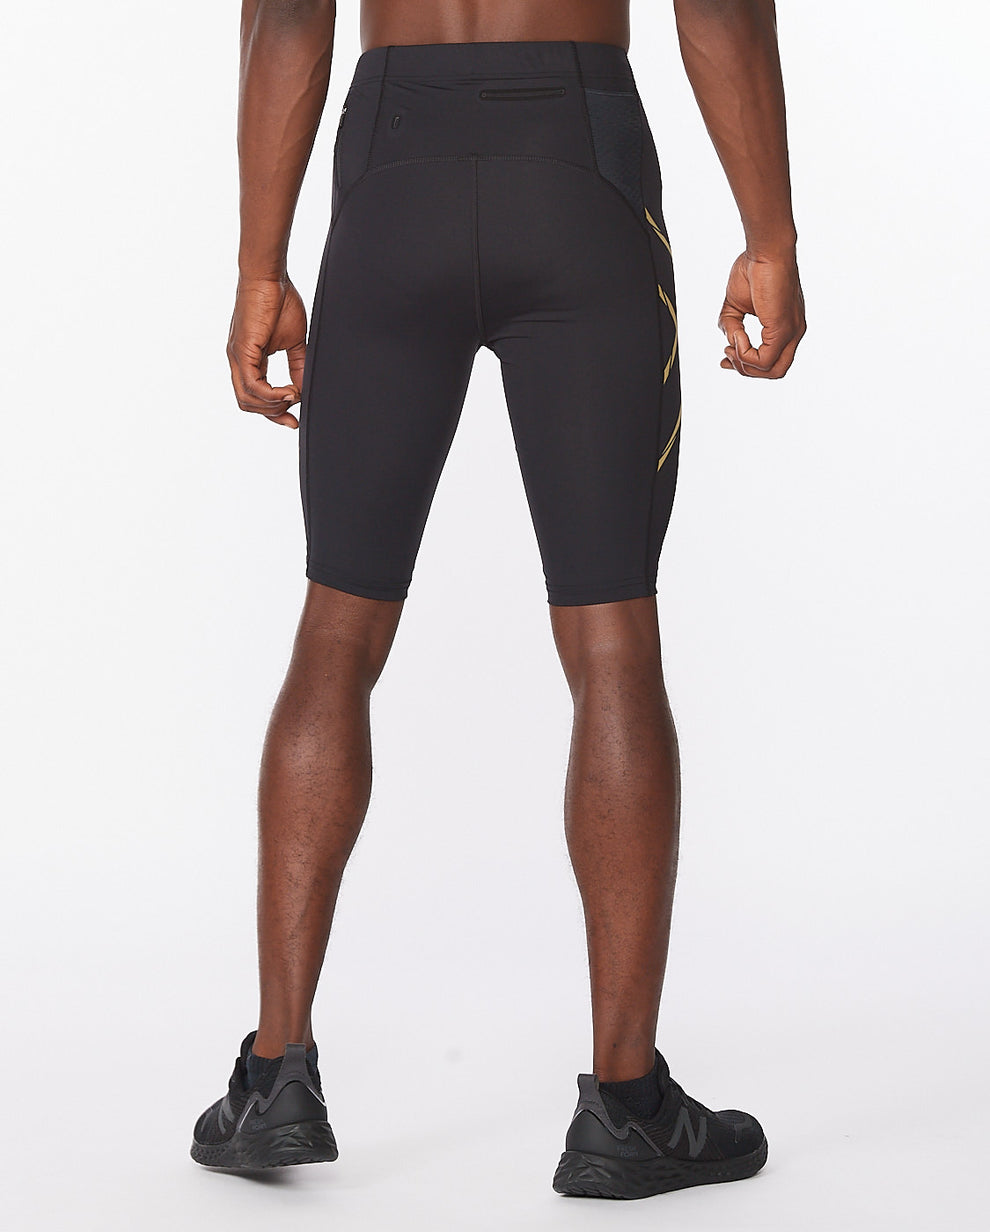 2XU Light Speed Compression Men's Cycling Shorts (Black/Gold Reflective)